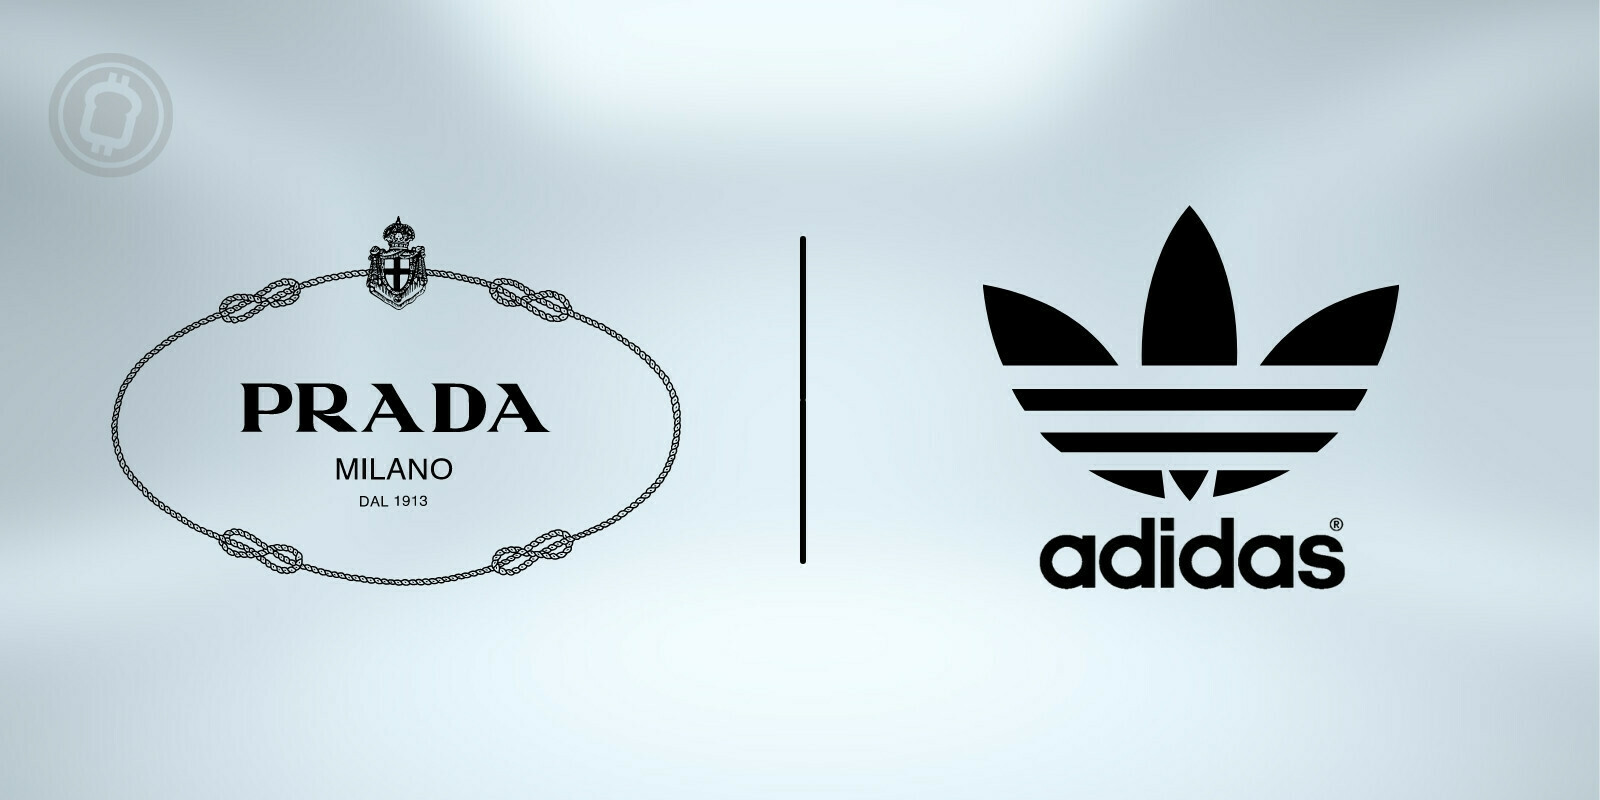 Les célèbres marques Adidas et Prada annoncent un projet de NFT participatif